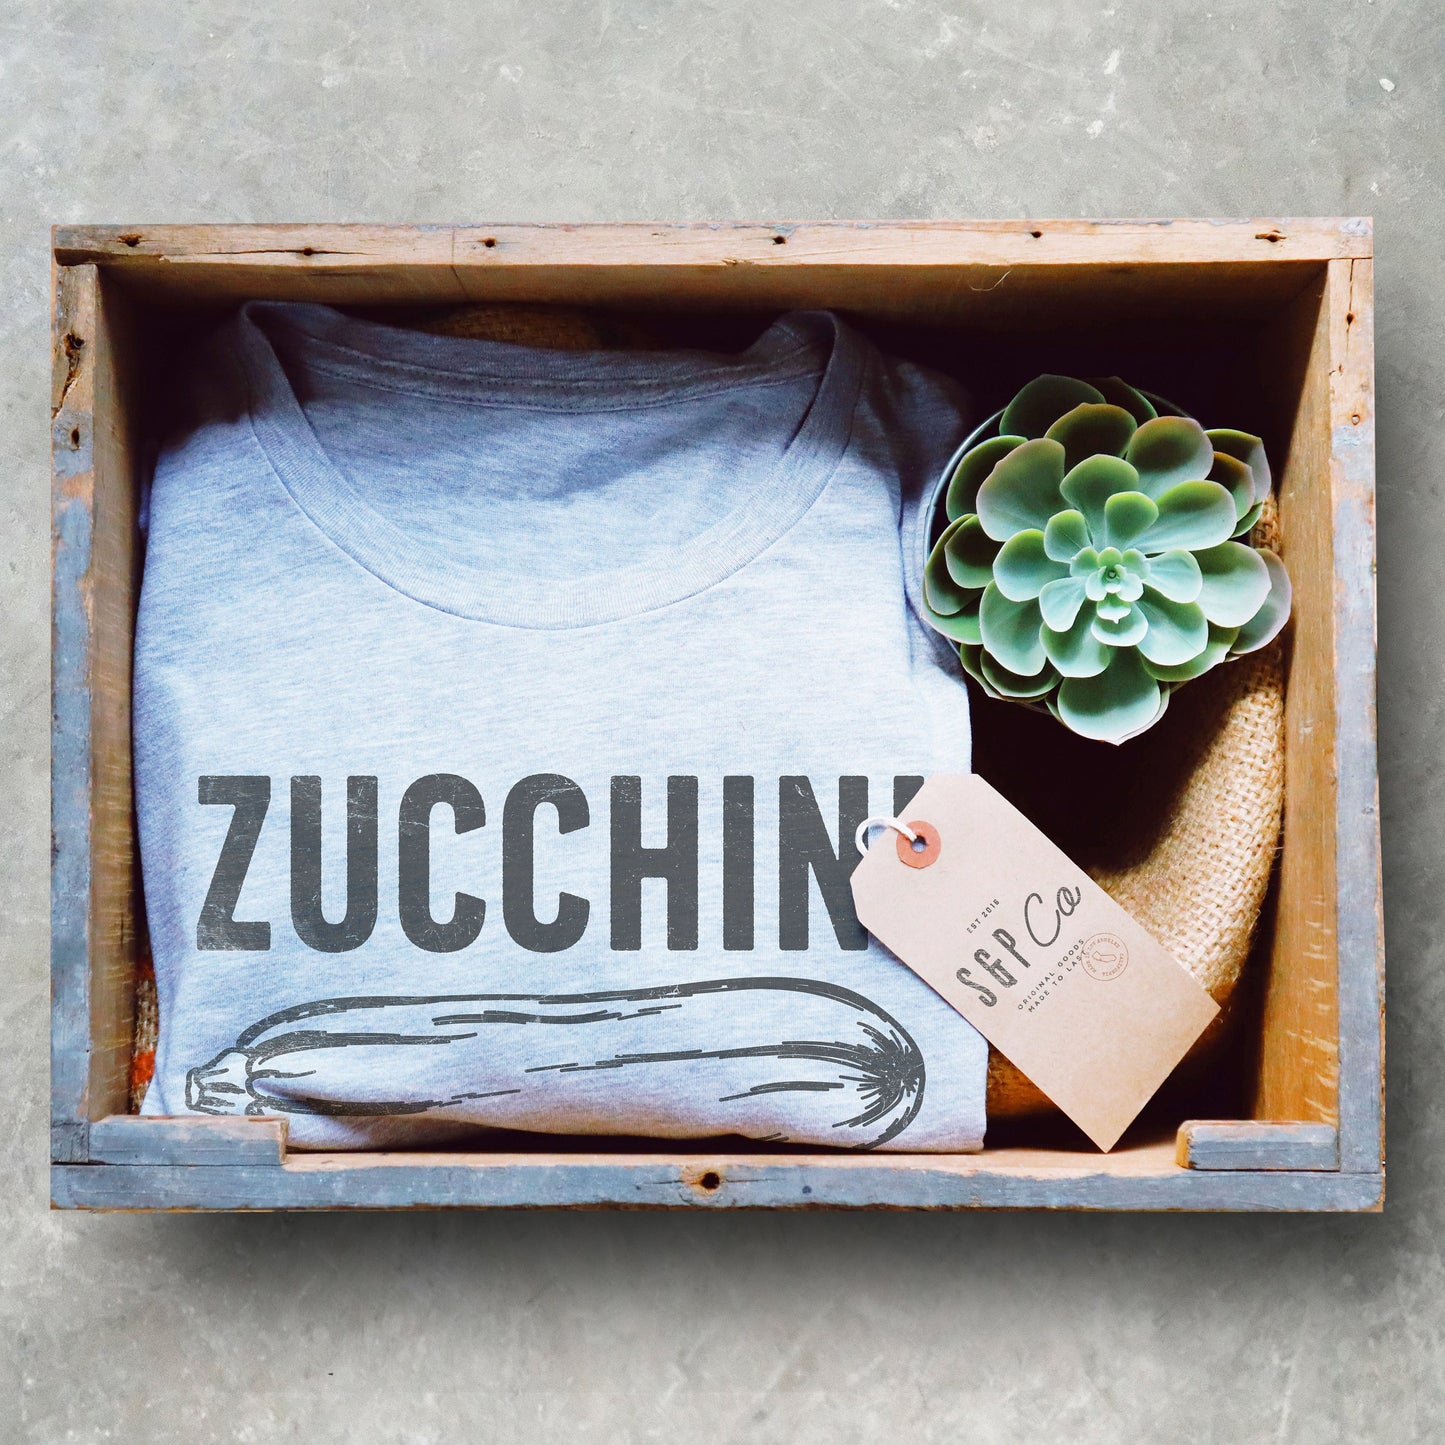 Zucchini Holic Unisex Shirt - Vegan Shirt, Vegetarian Shirt, Vegetable TShirt, Vegan Gift, Vegetarian Gift, Gardening Shirt